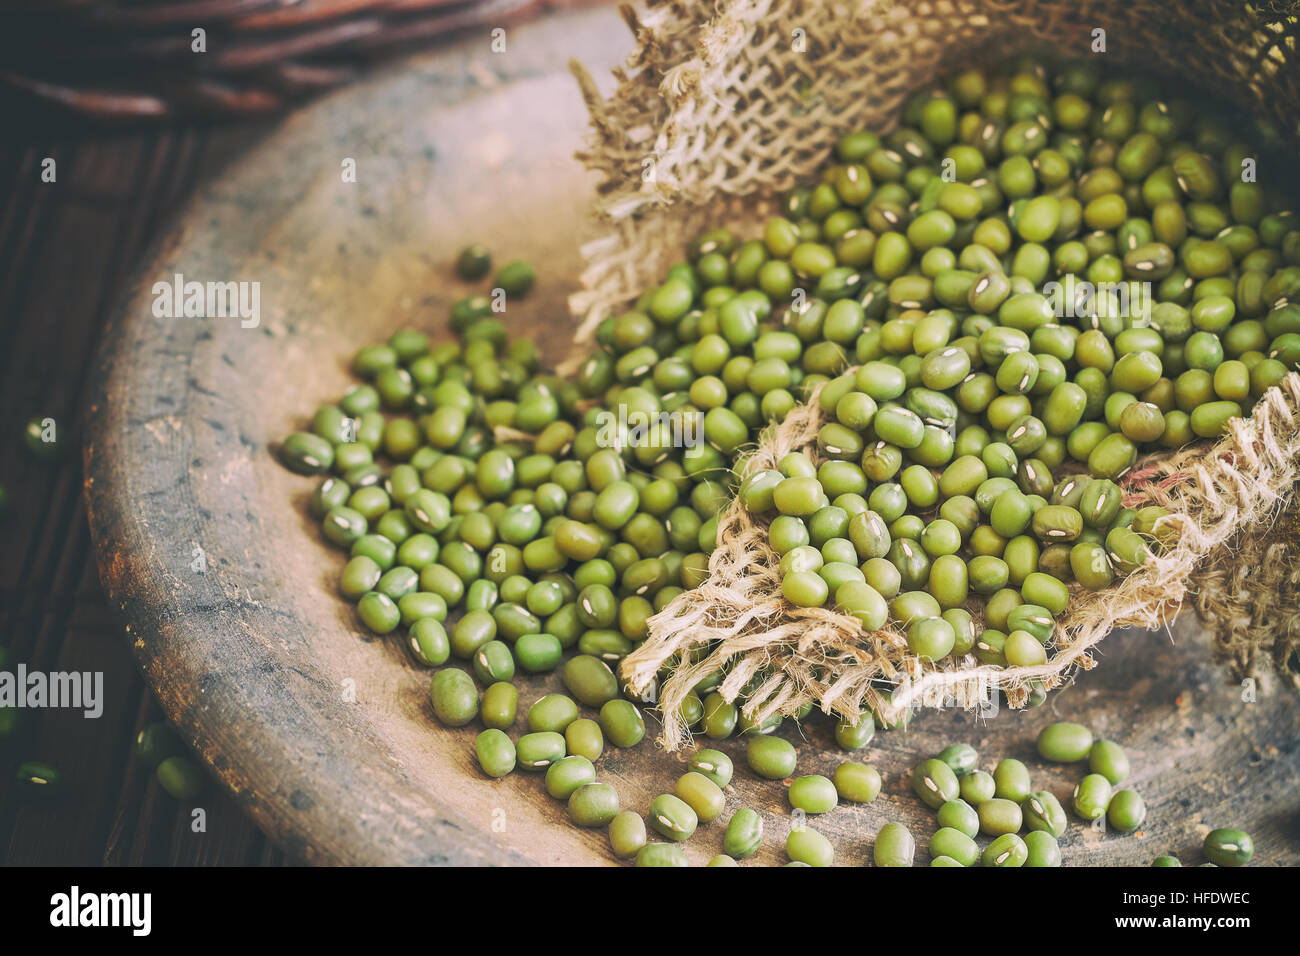 Raw mung beans (Vigna radiata) spilling from burlap bag Stock Photo